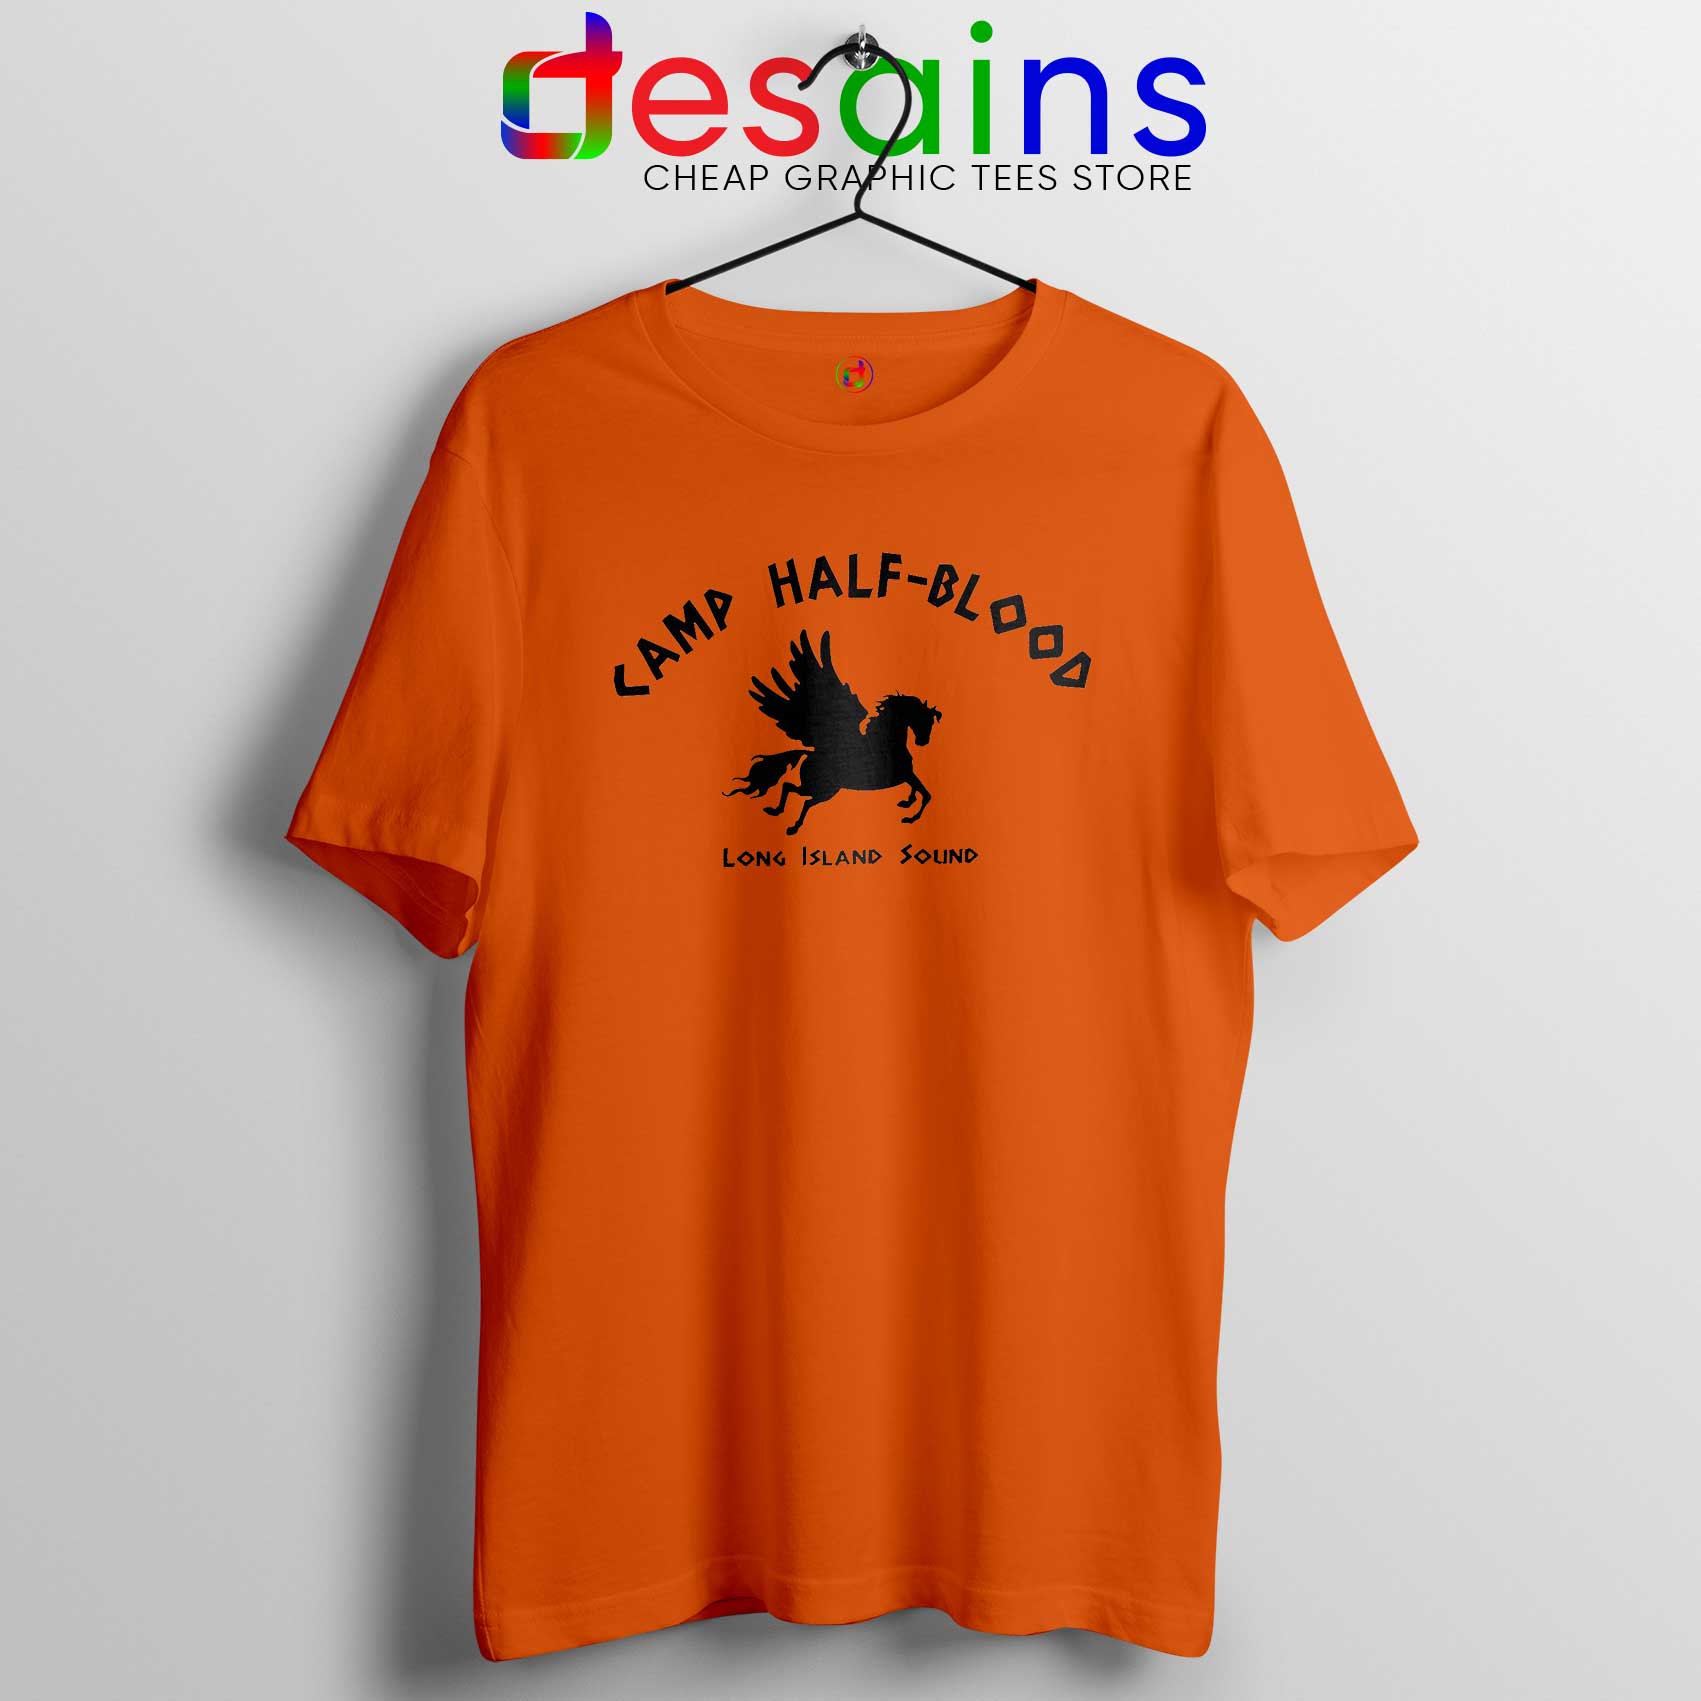 Camp Half-Blood Adult Unisex T-Shirt